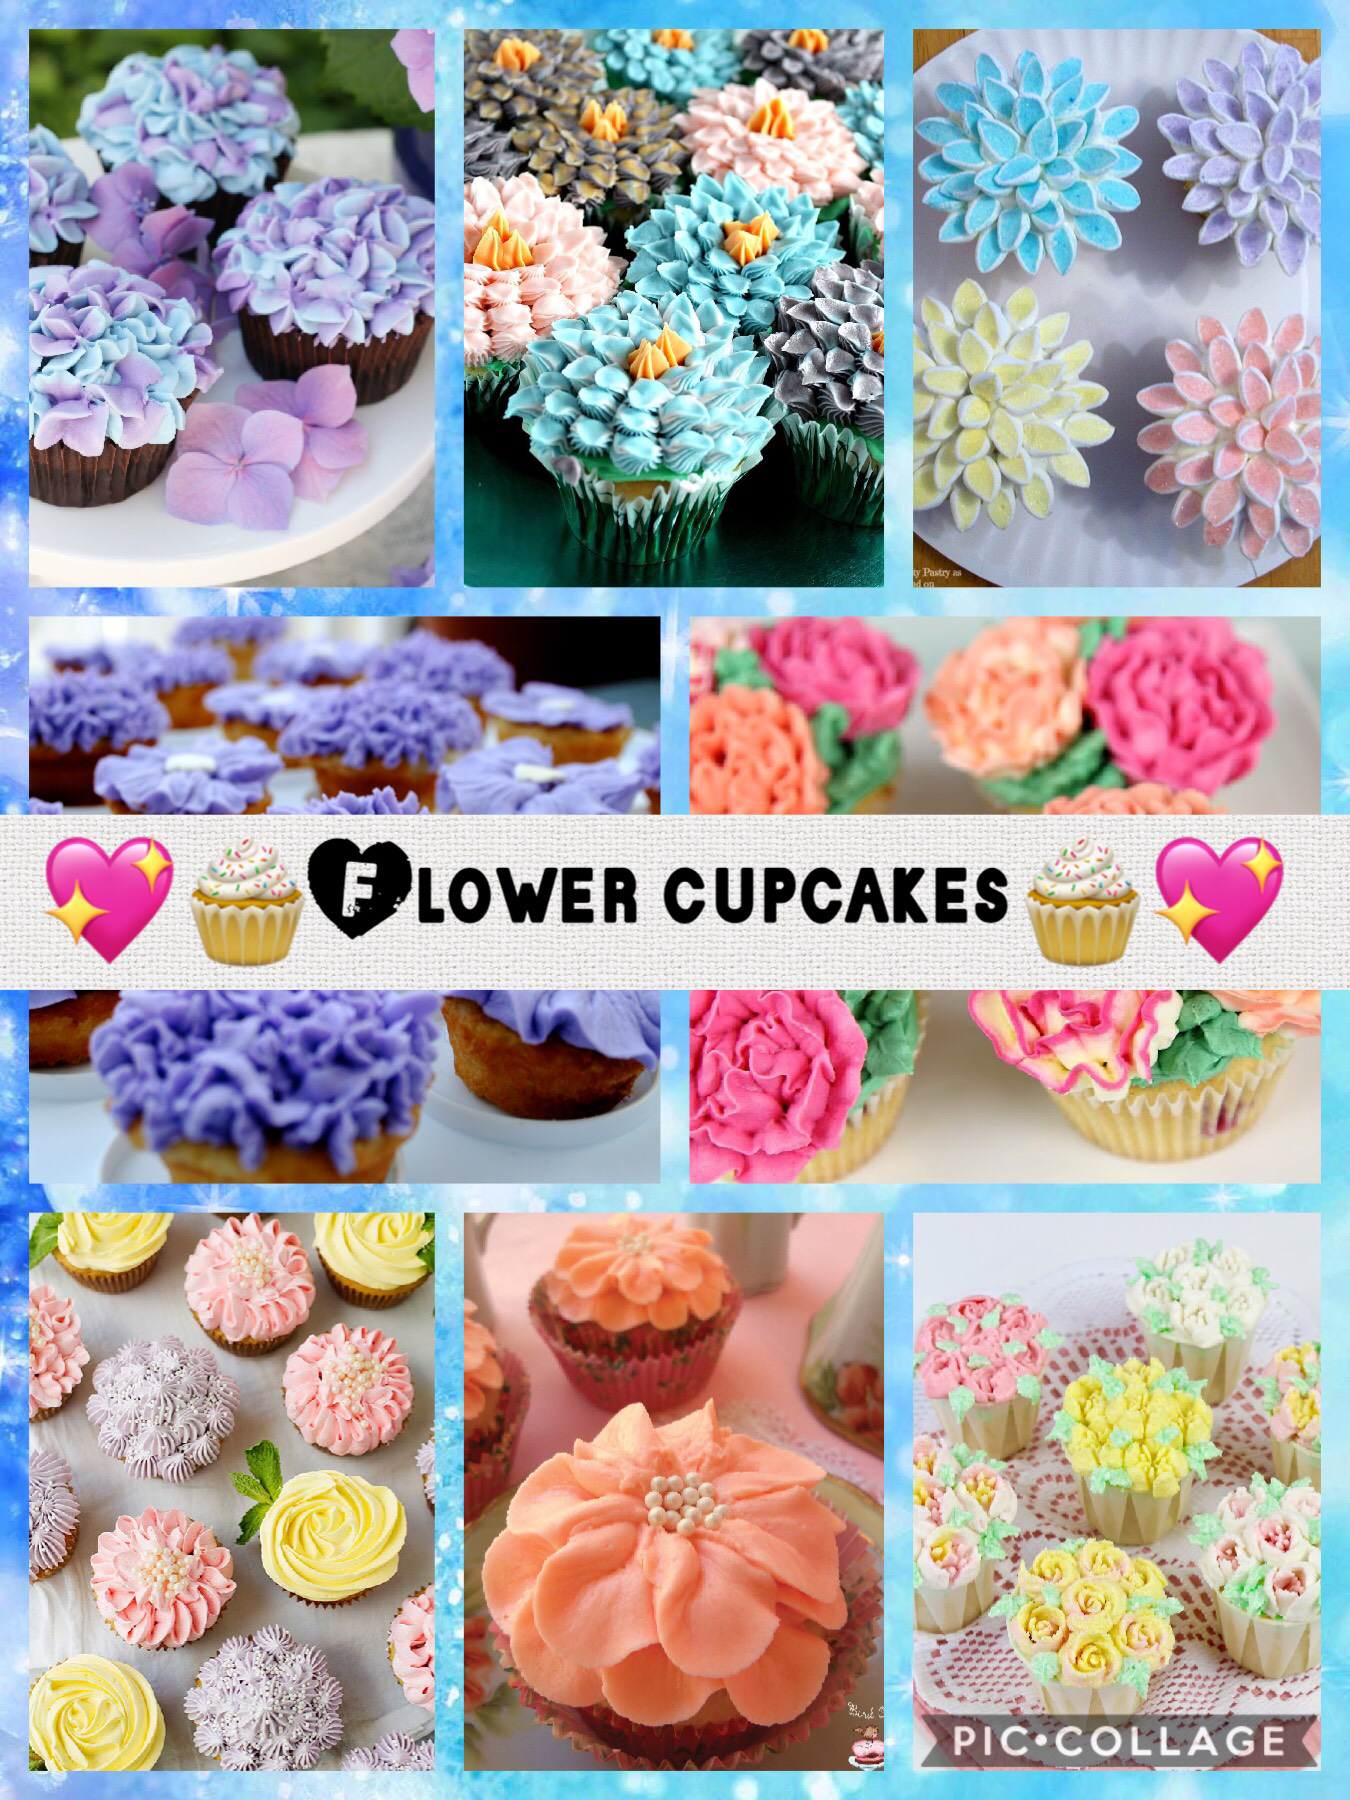 Flowercupcakes!